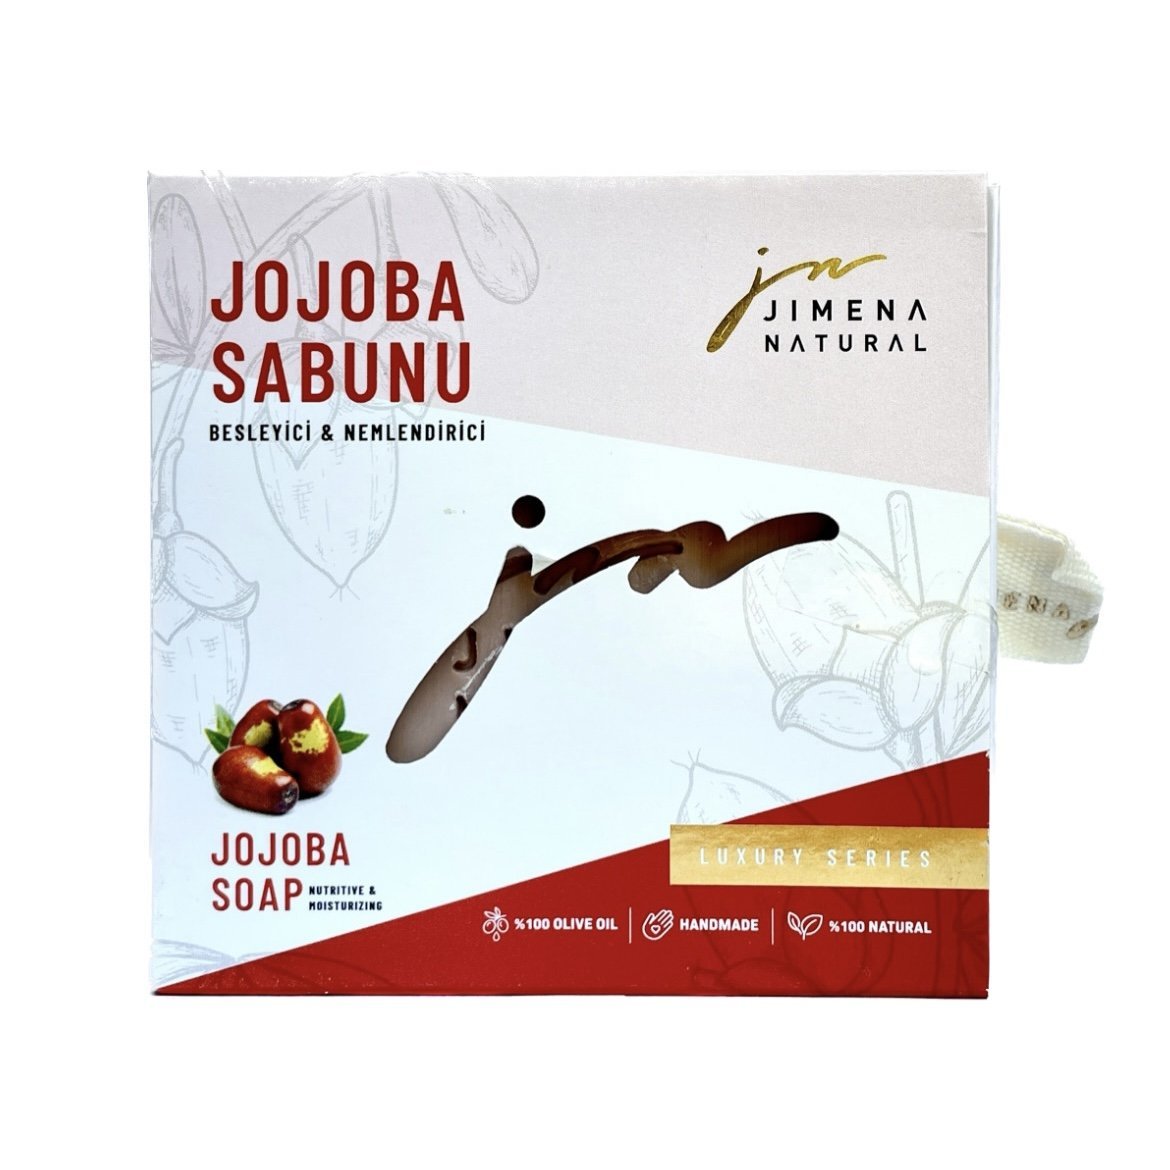 Jimena Natural Jojoba Sabunu 150 gr (Kargo Dahil)